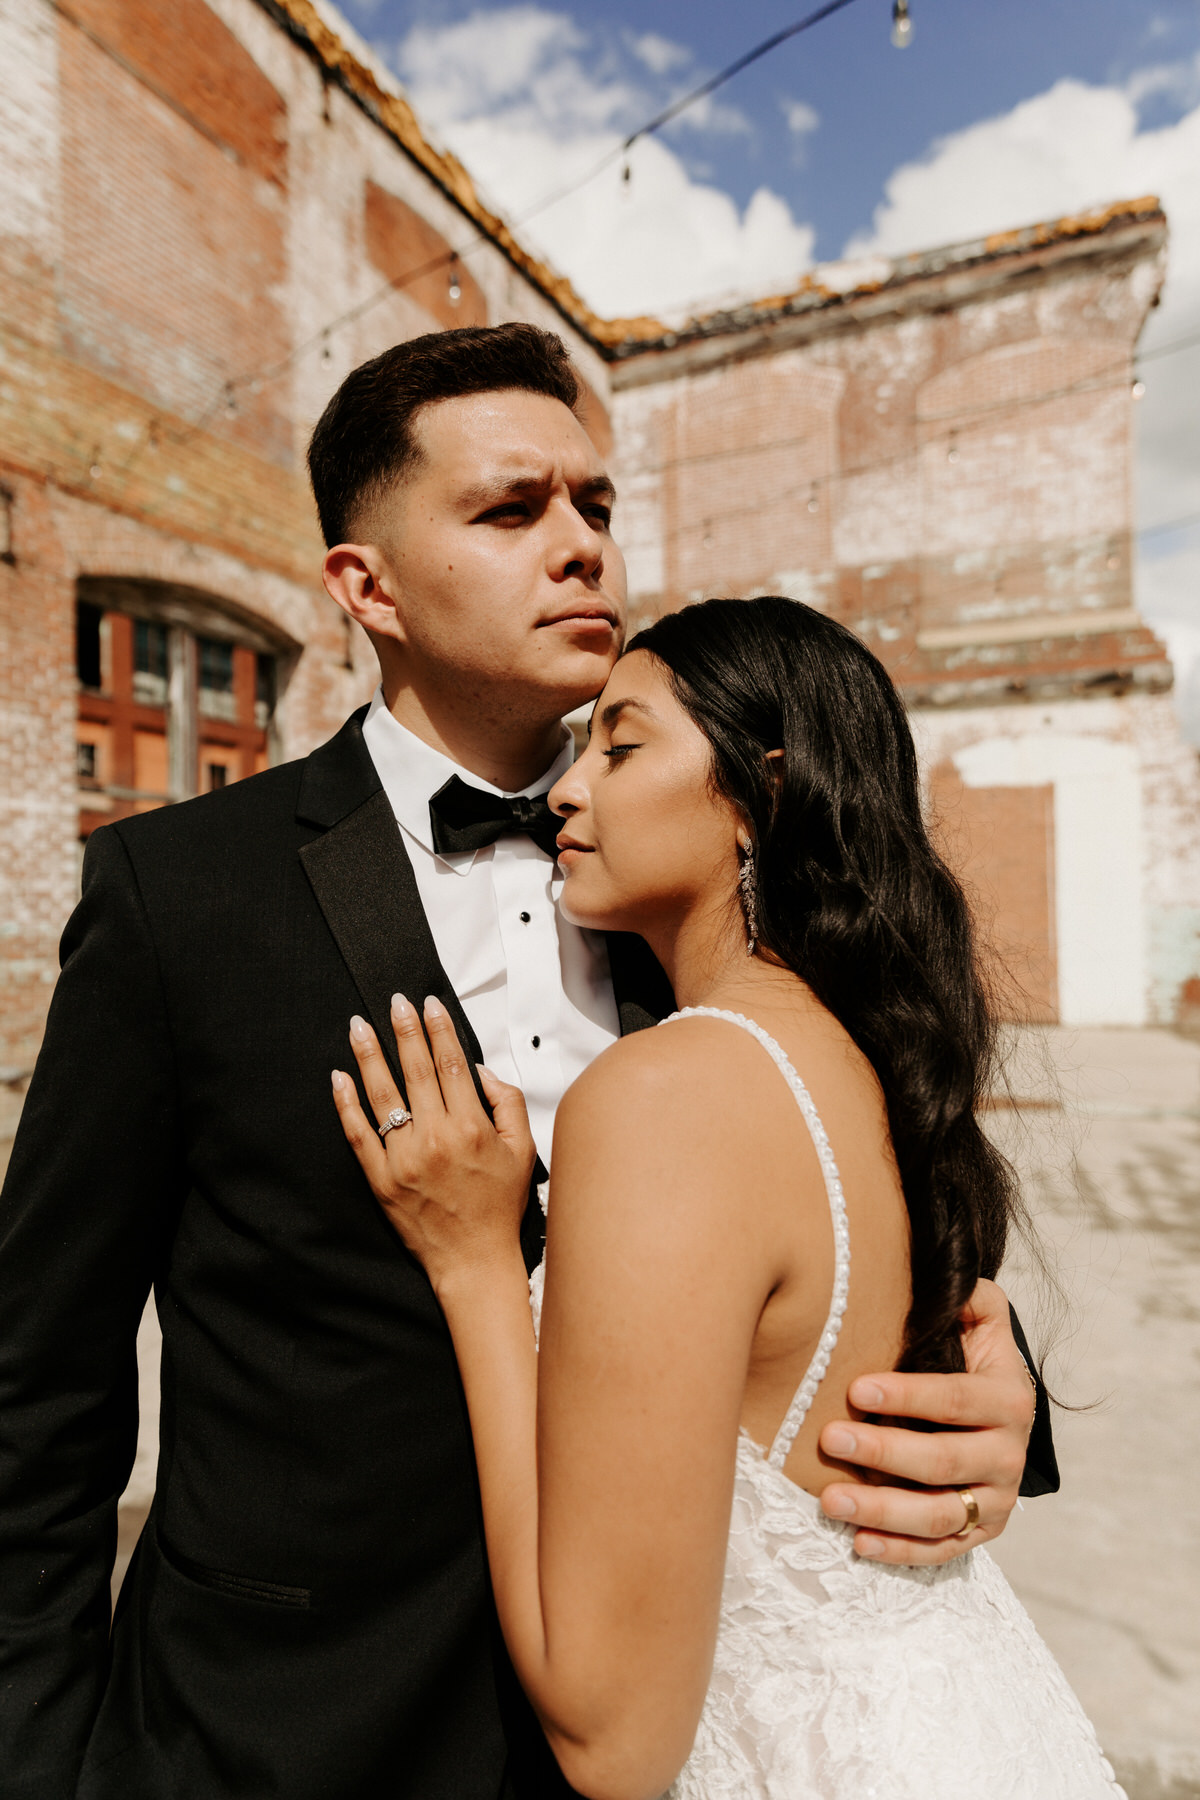 Latinx Wedding Couple - Hispanic Wedding - Jacqueline Vizcaino - Tinted Events